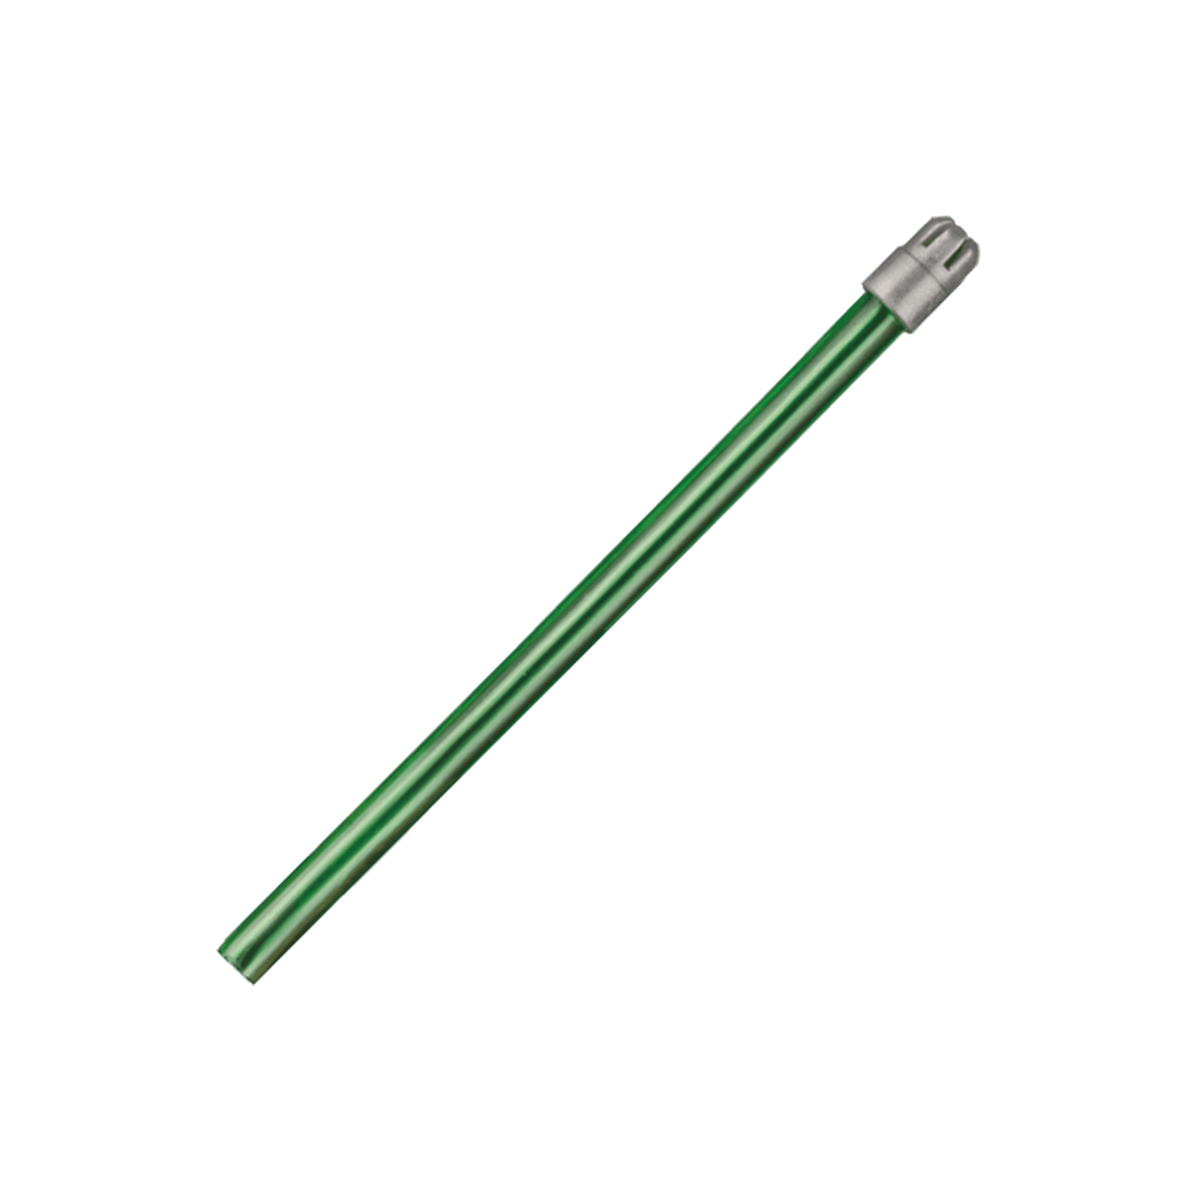 Monoart Speichelsauger 12,5 cm - Farbe: grün